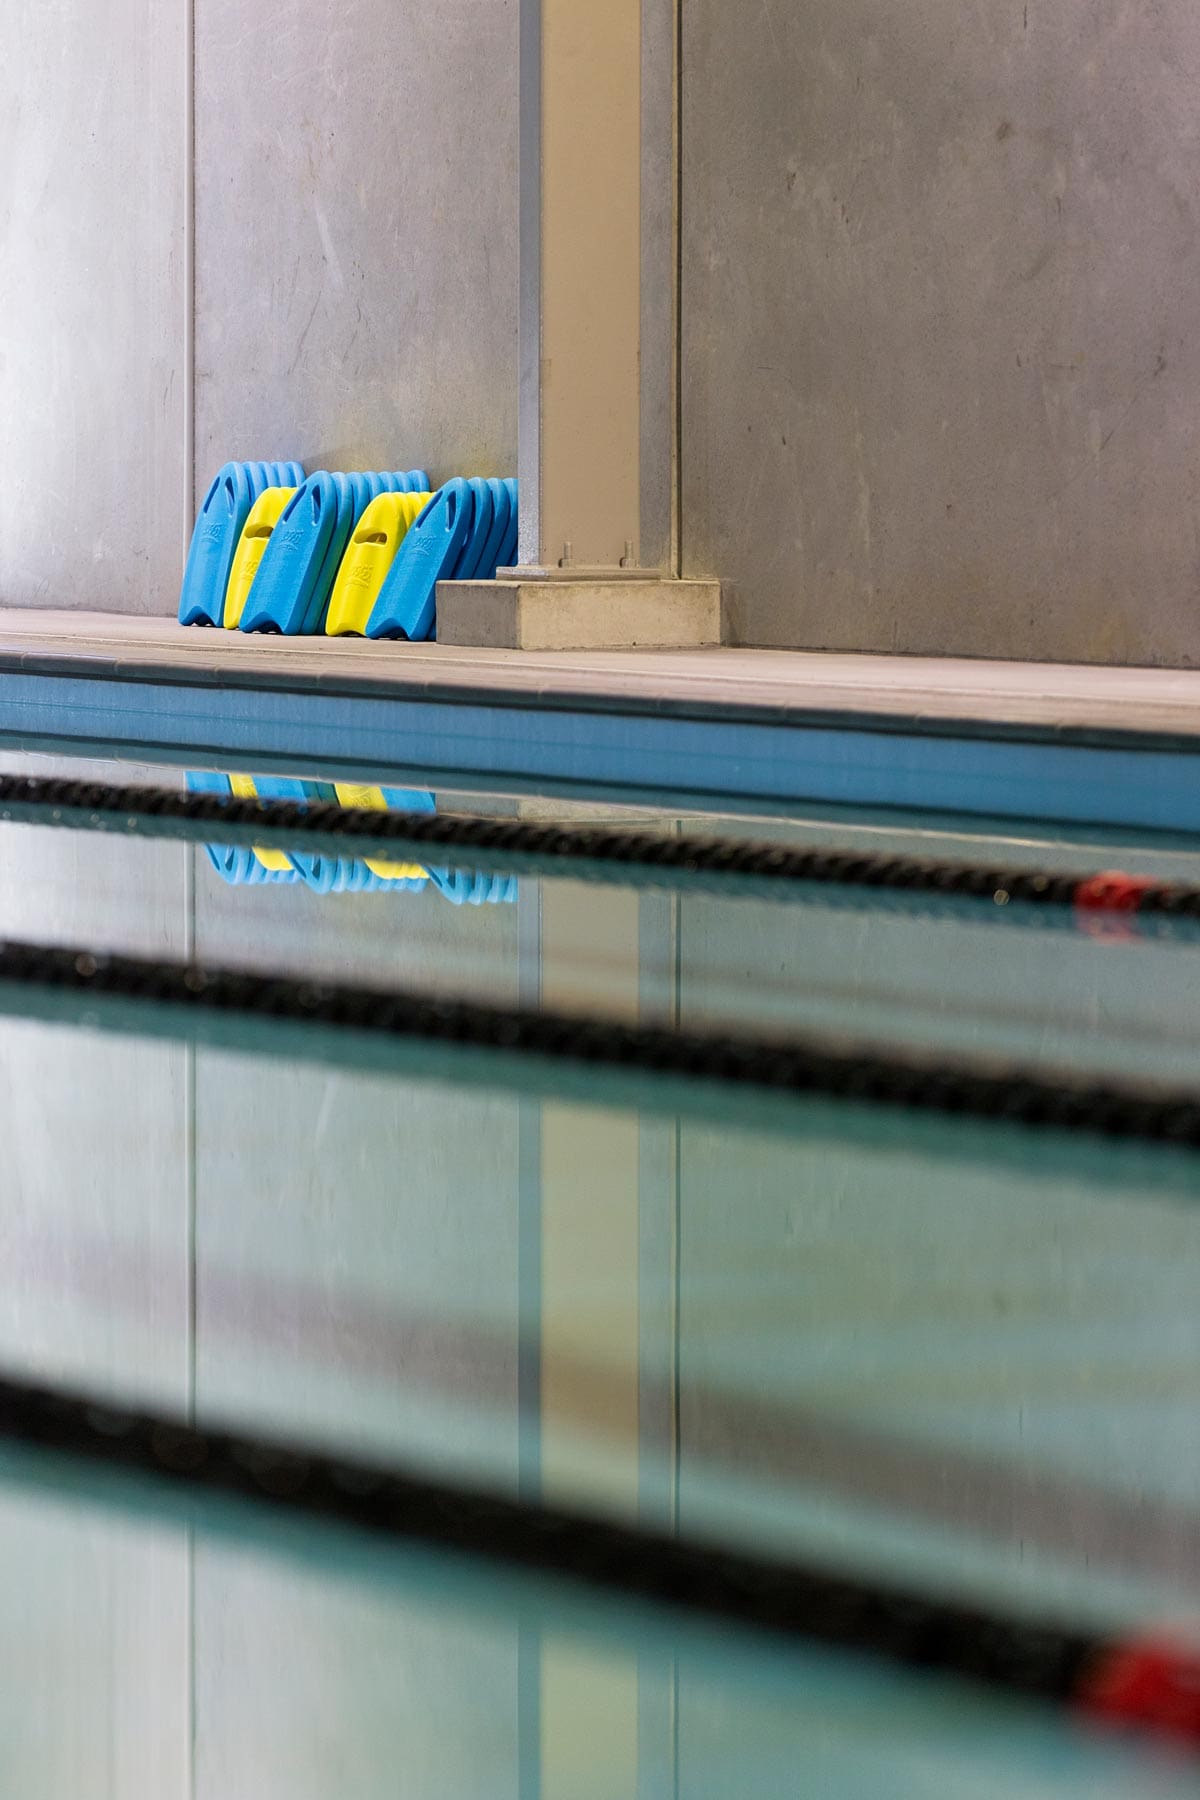 NZCCL | Bartlett Swim School